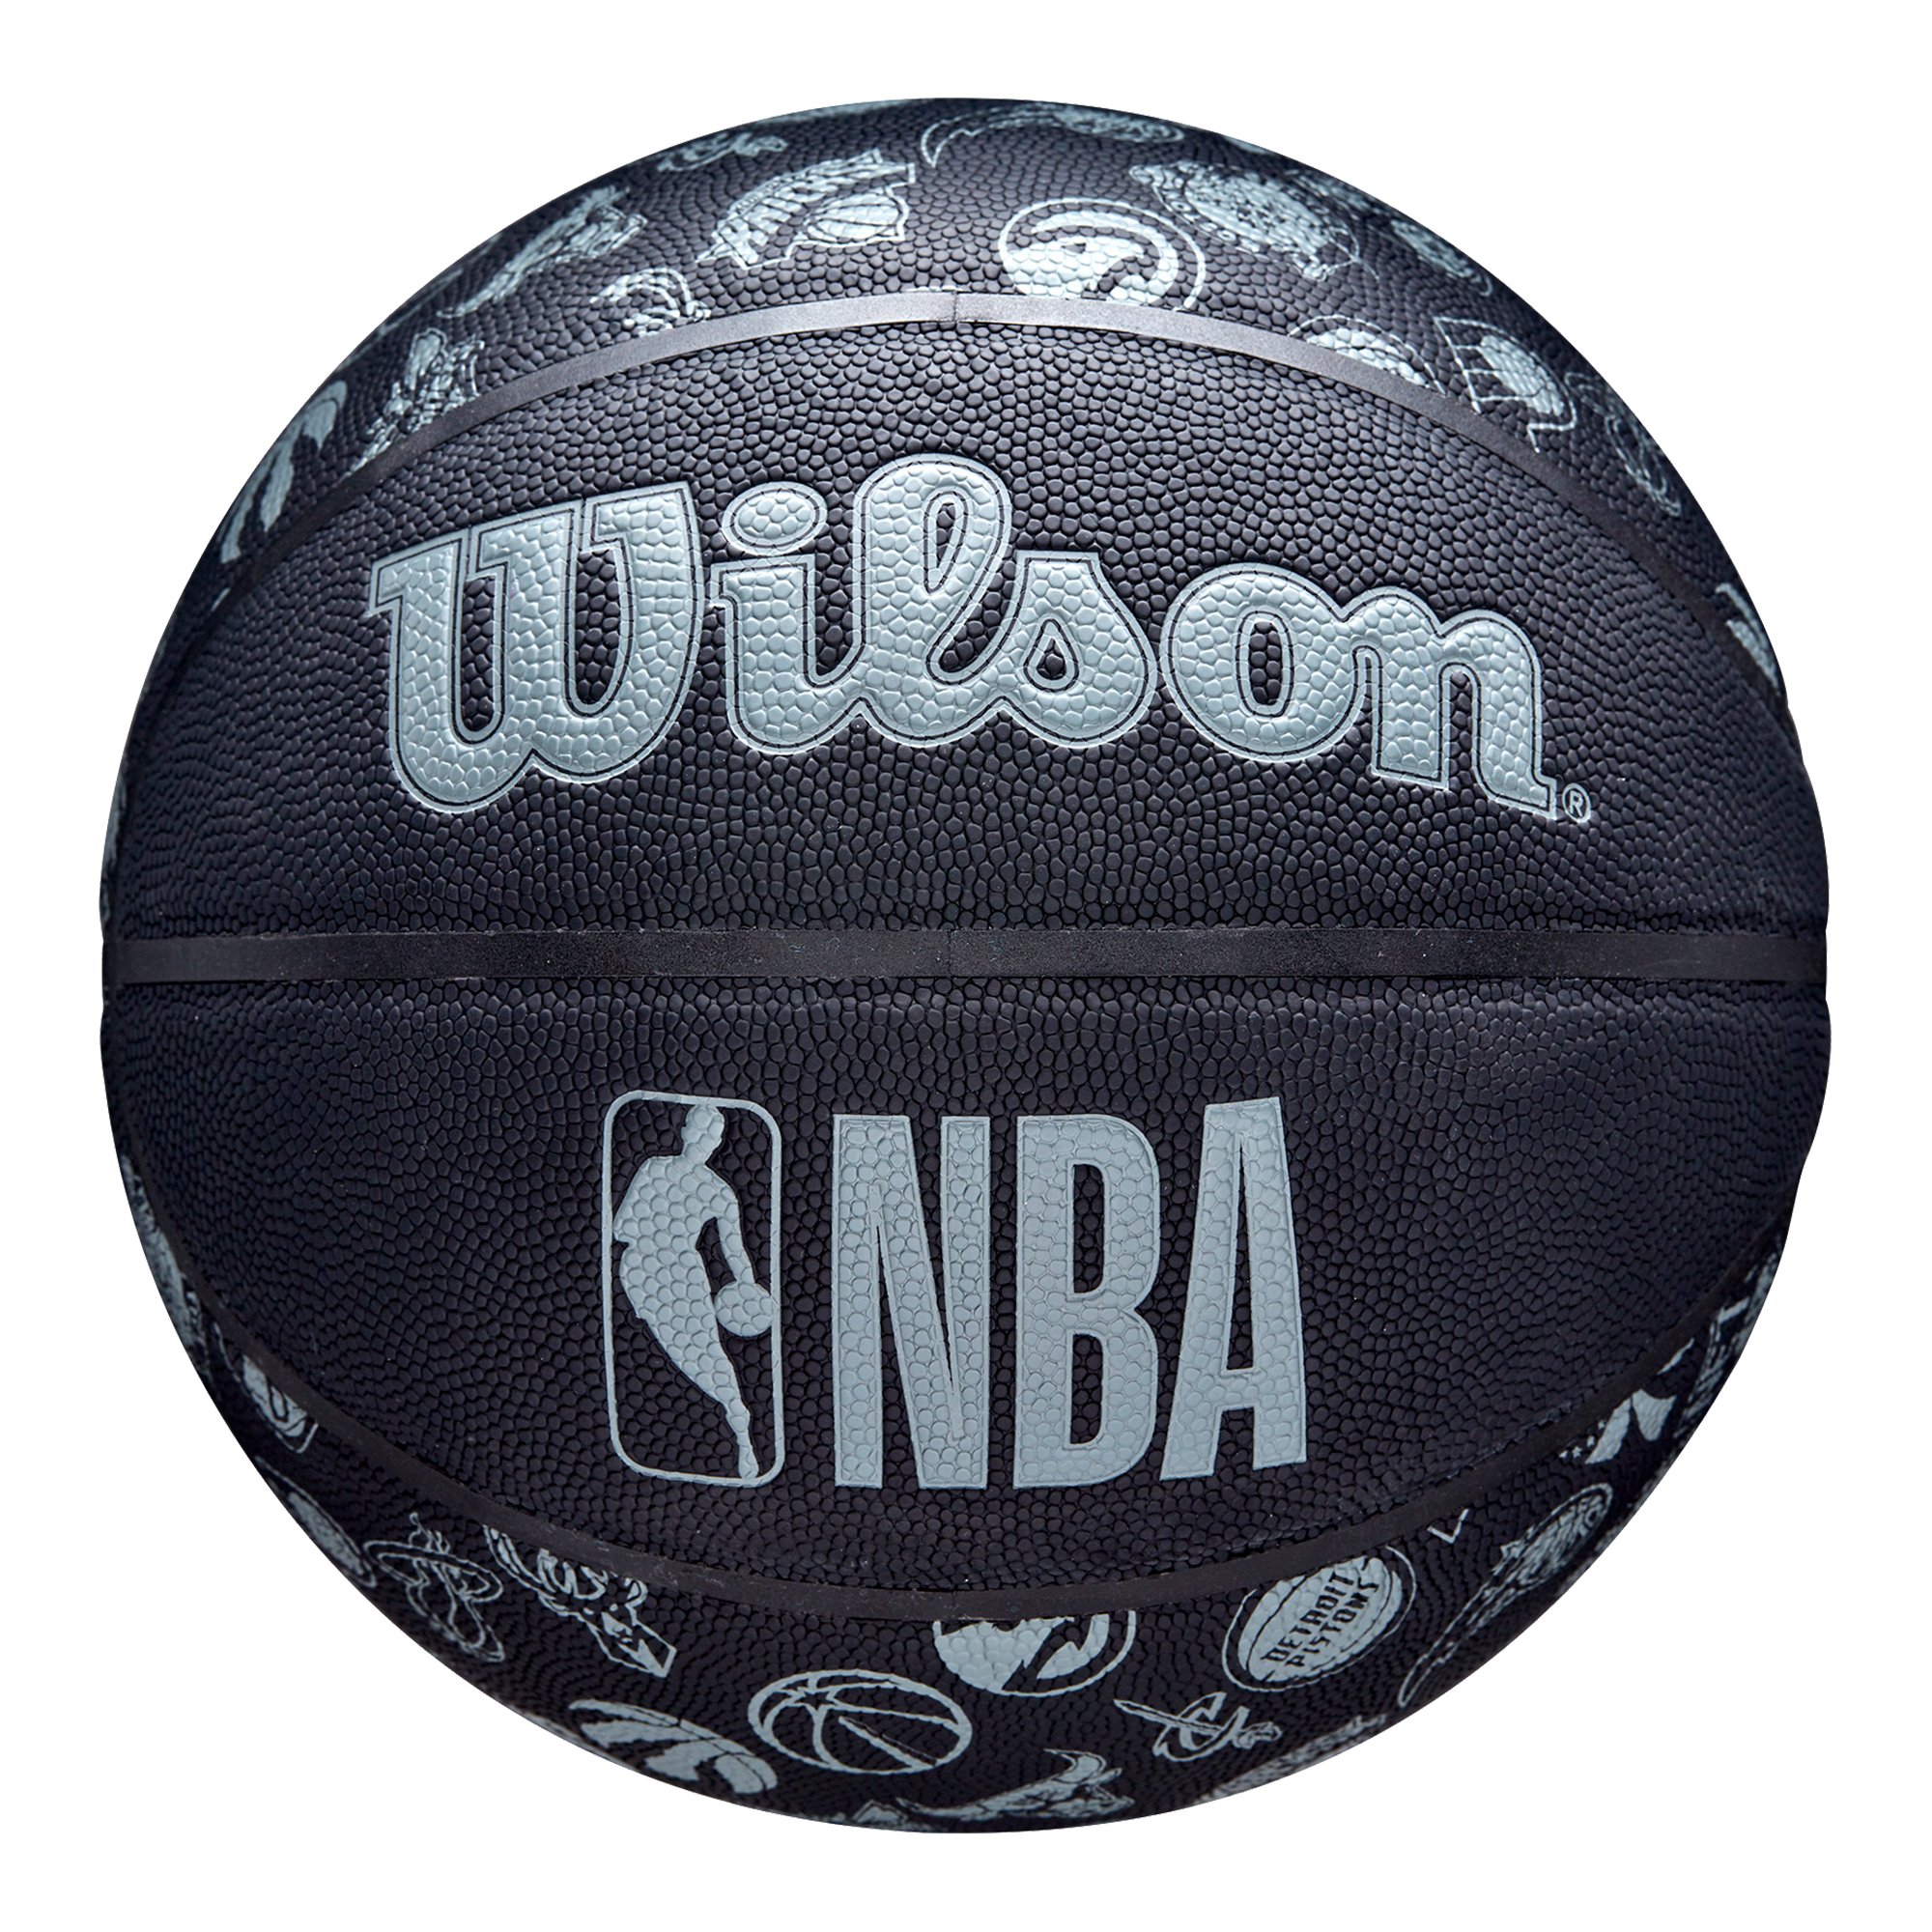 Wilson NBA All Team Basketball Black